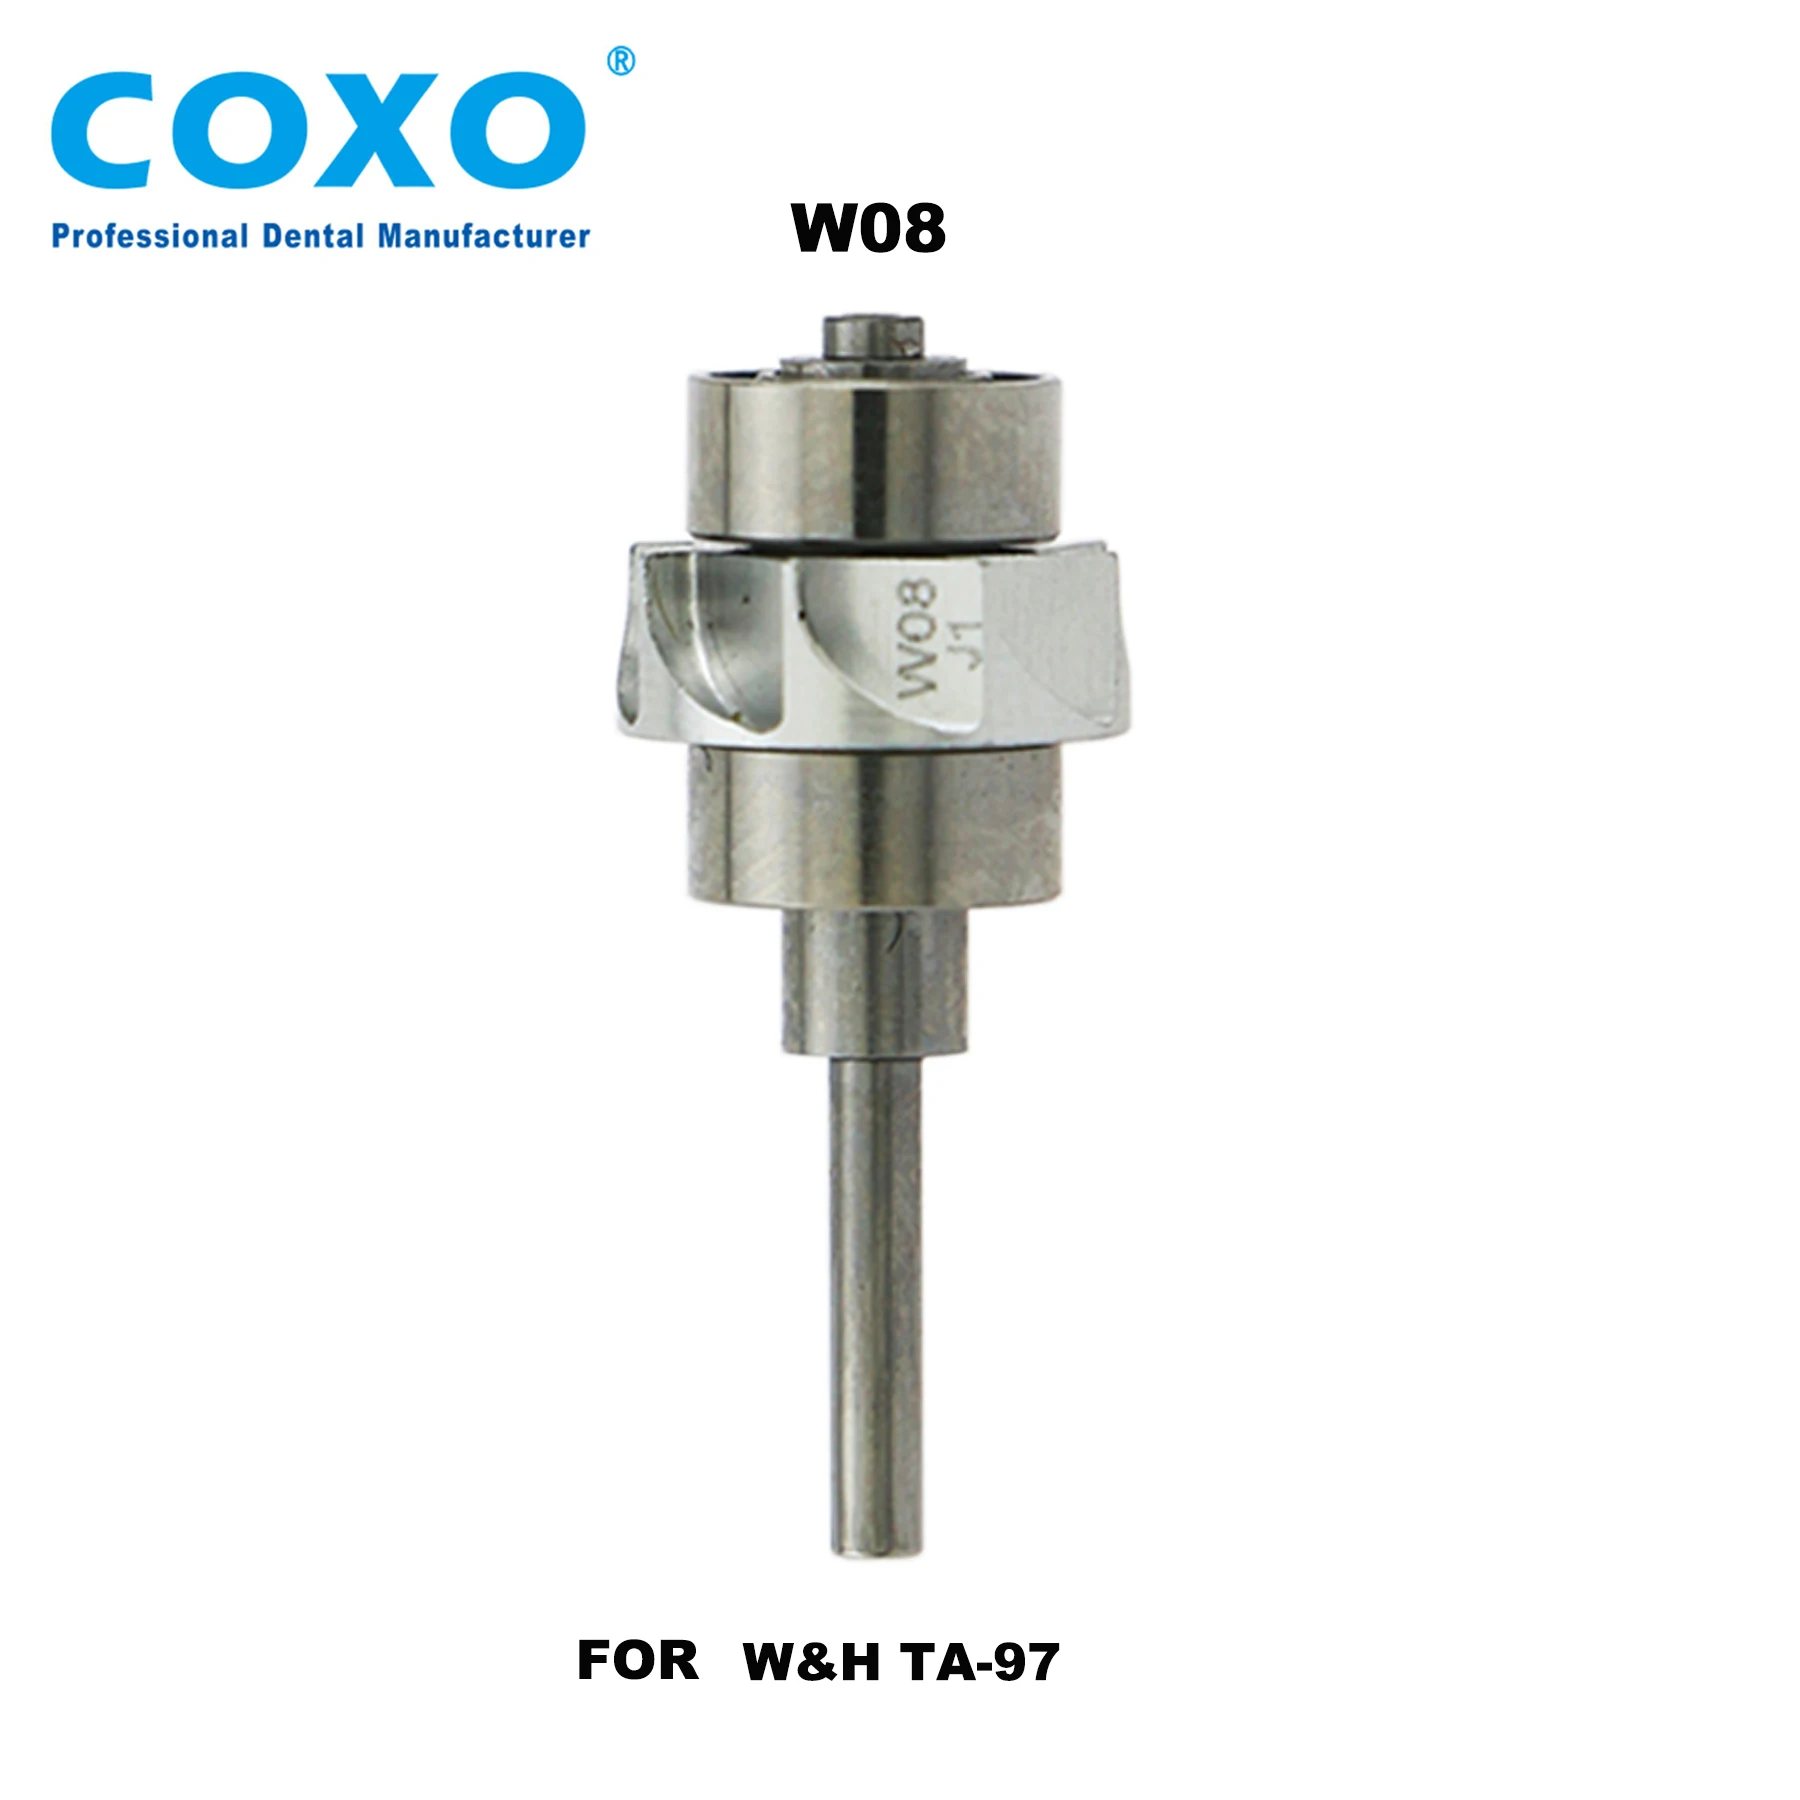 COXO Dental Spare Rotor Cartridge High Speed Turbine W08 For W&H TA-97 Handpiece